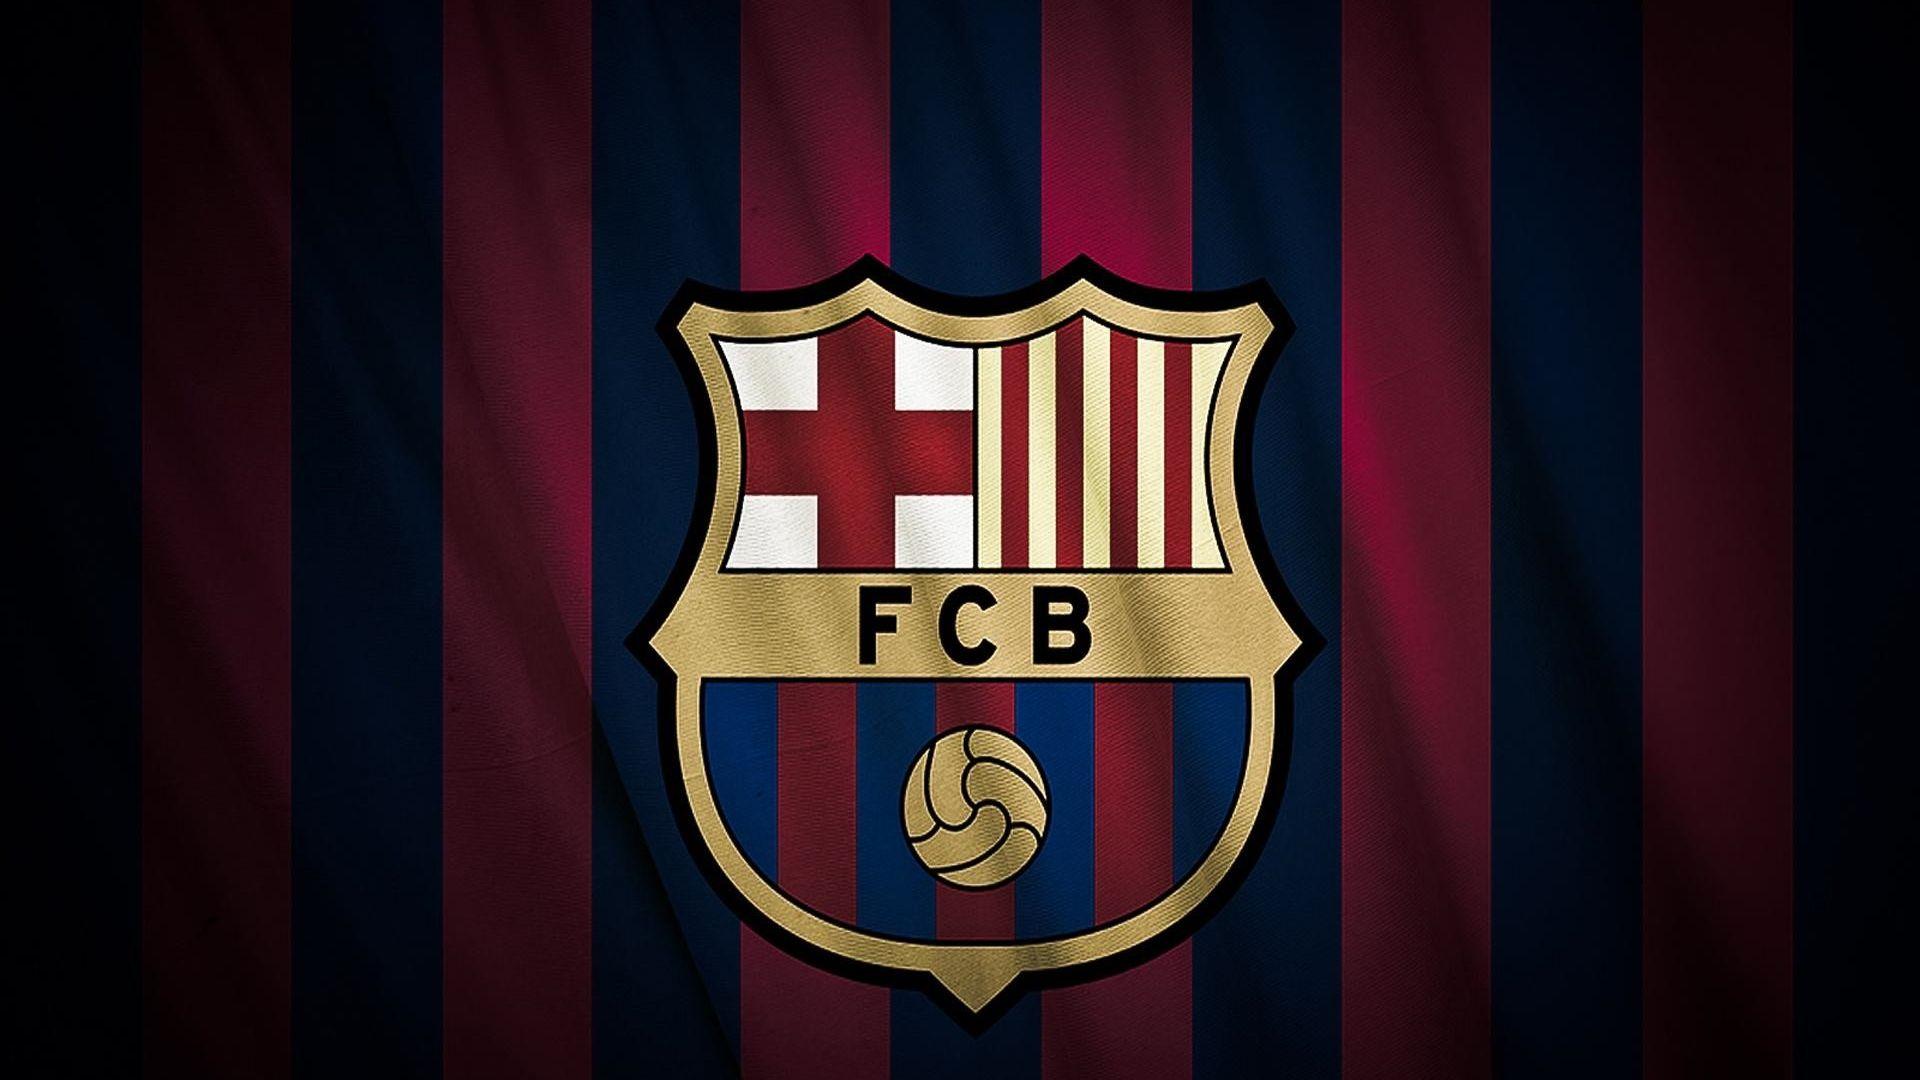 Football Club Logo Fc Barcelona Wallpaper Image High Quality